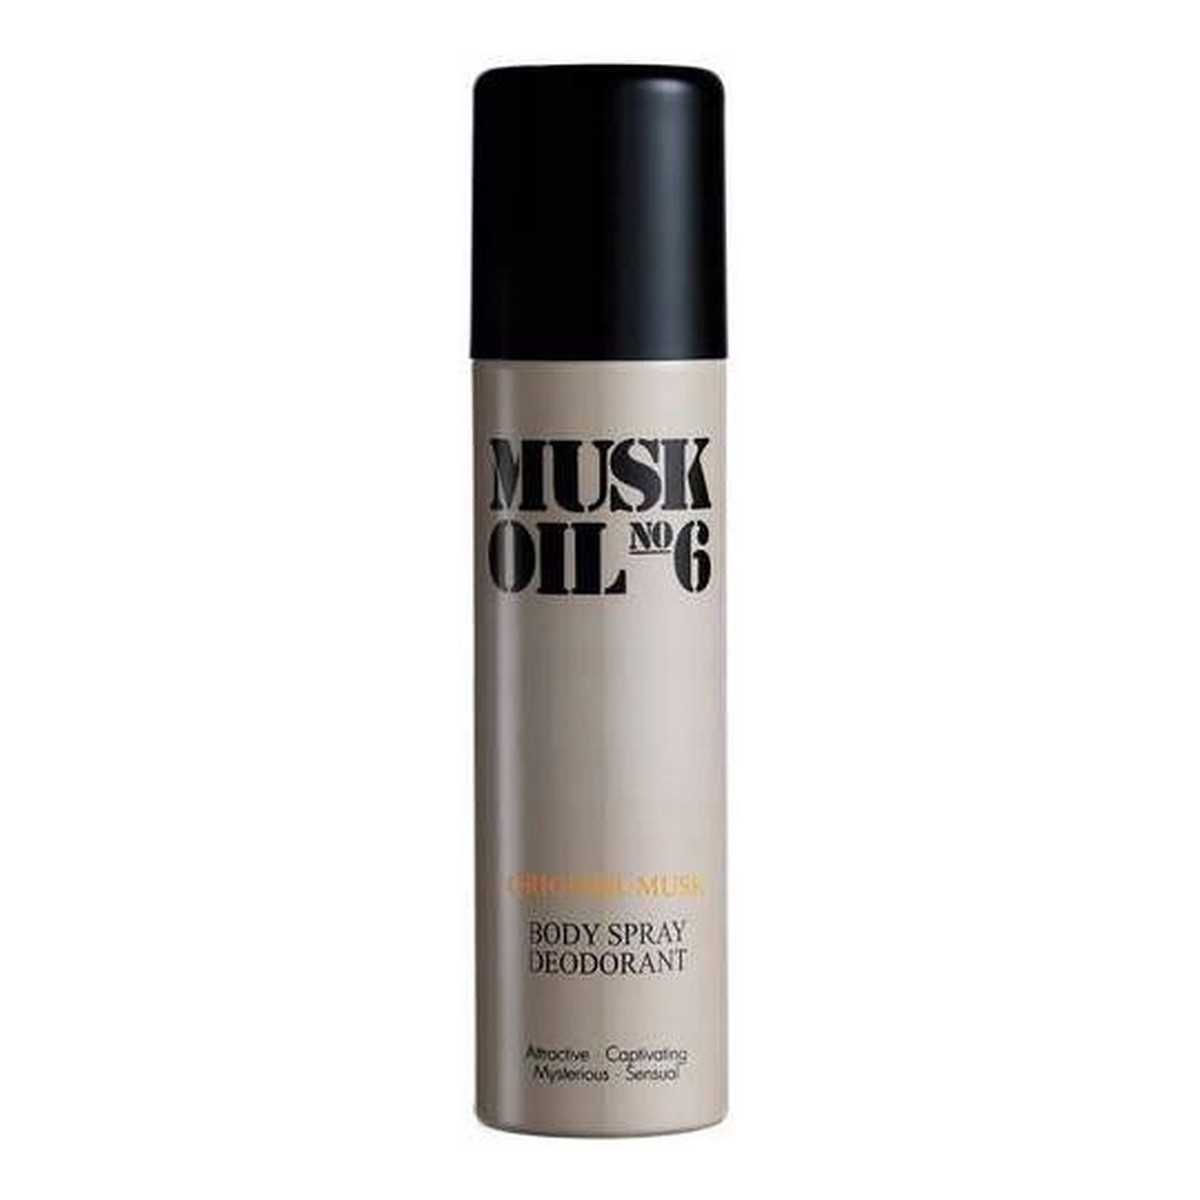 Gosh Musk Oil No 6 Dezodorant Spray 150ml